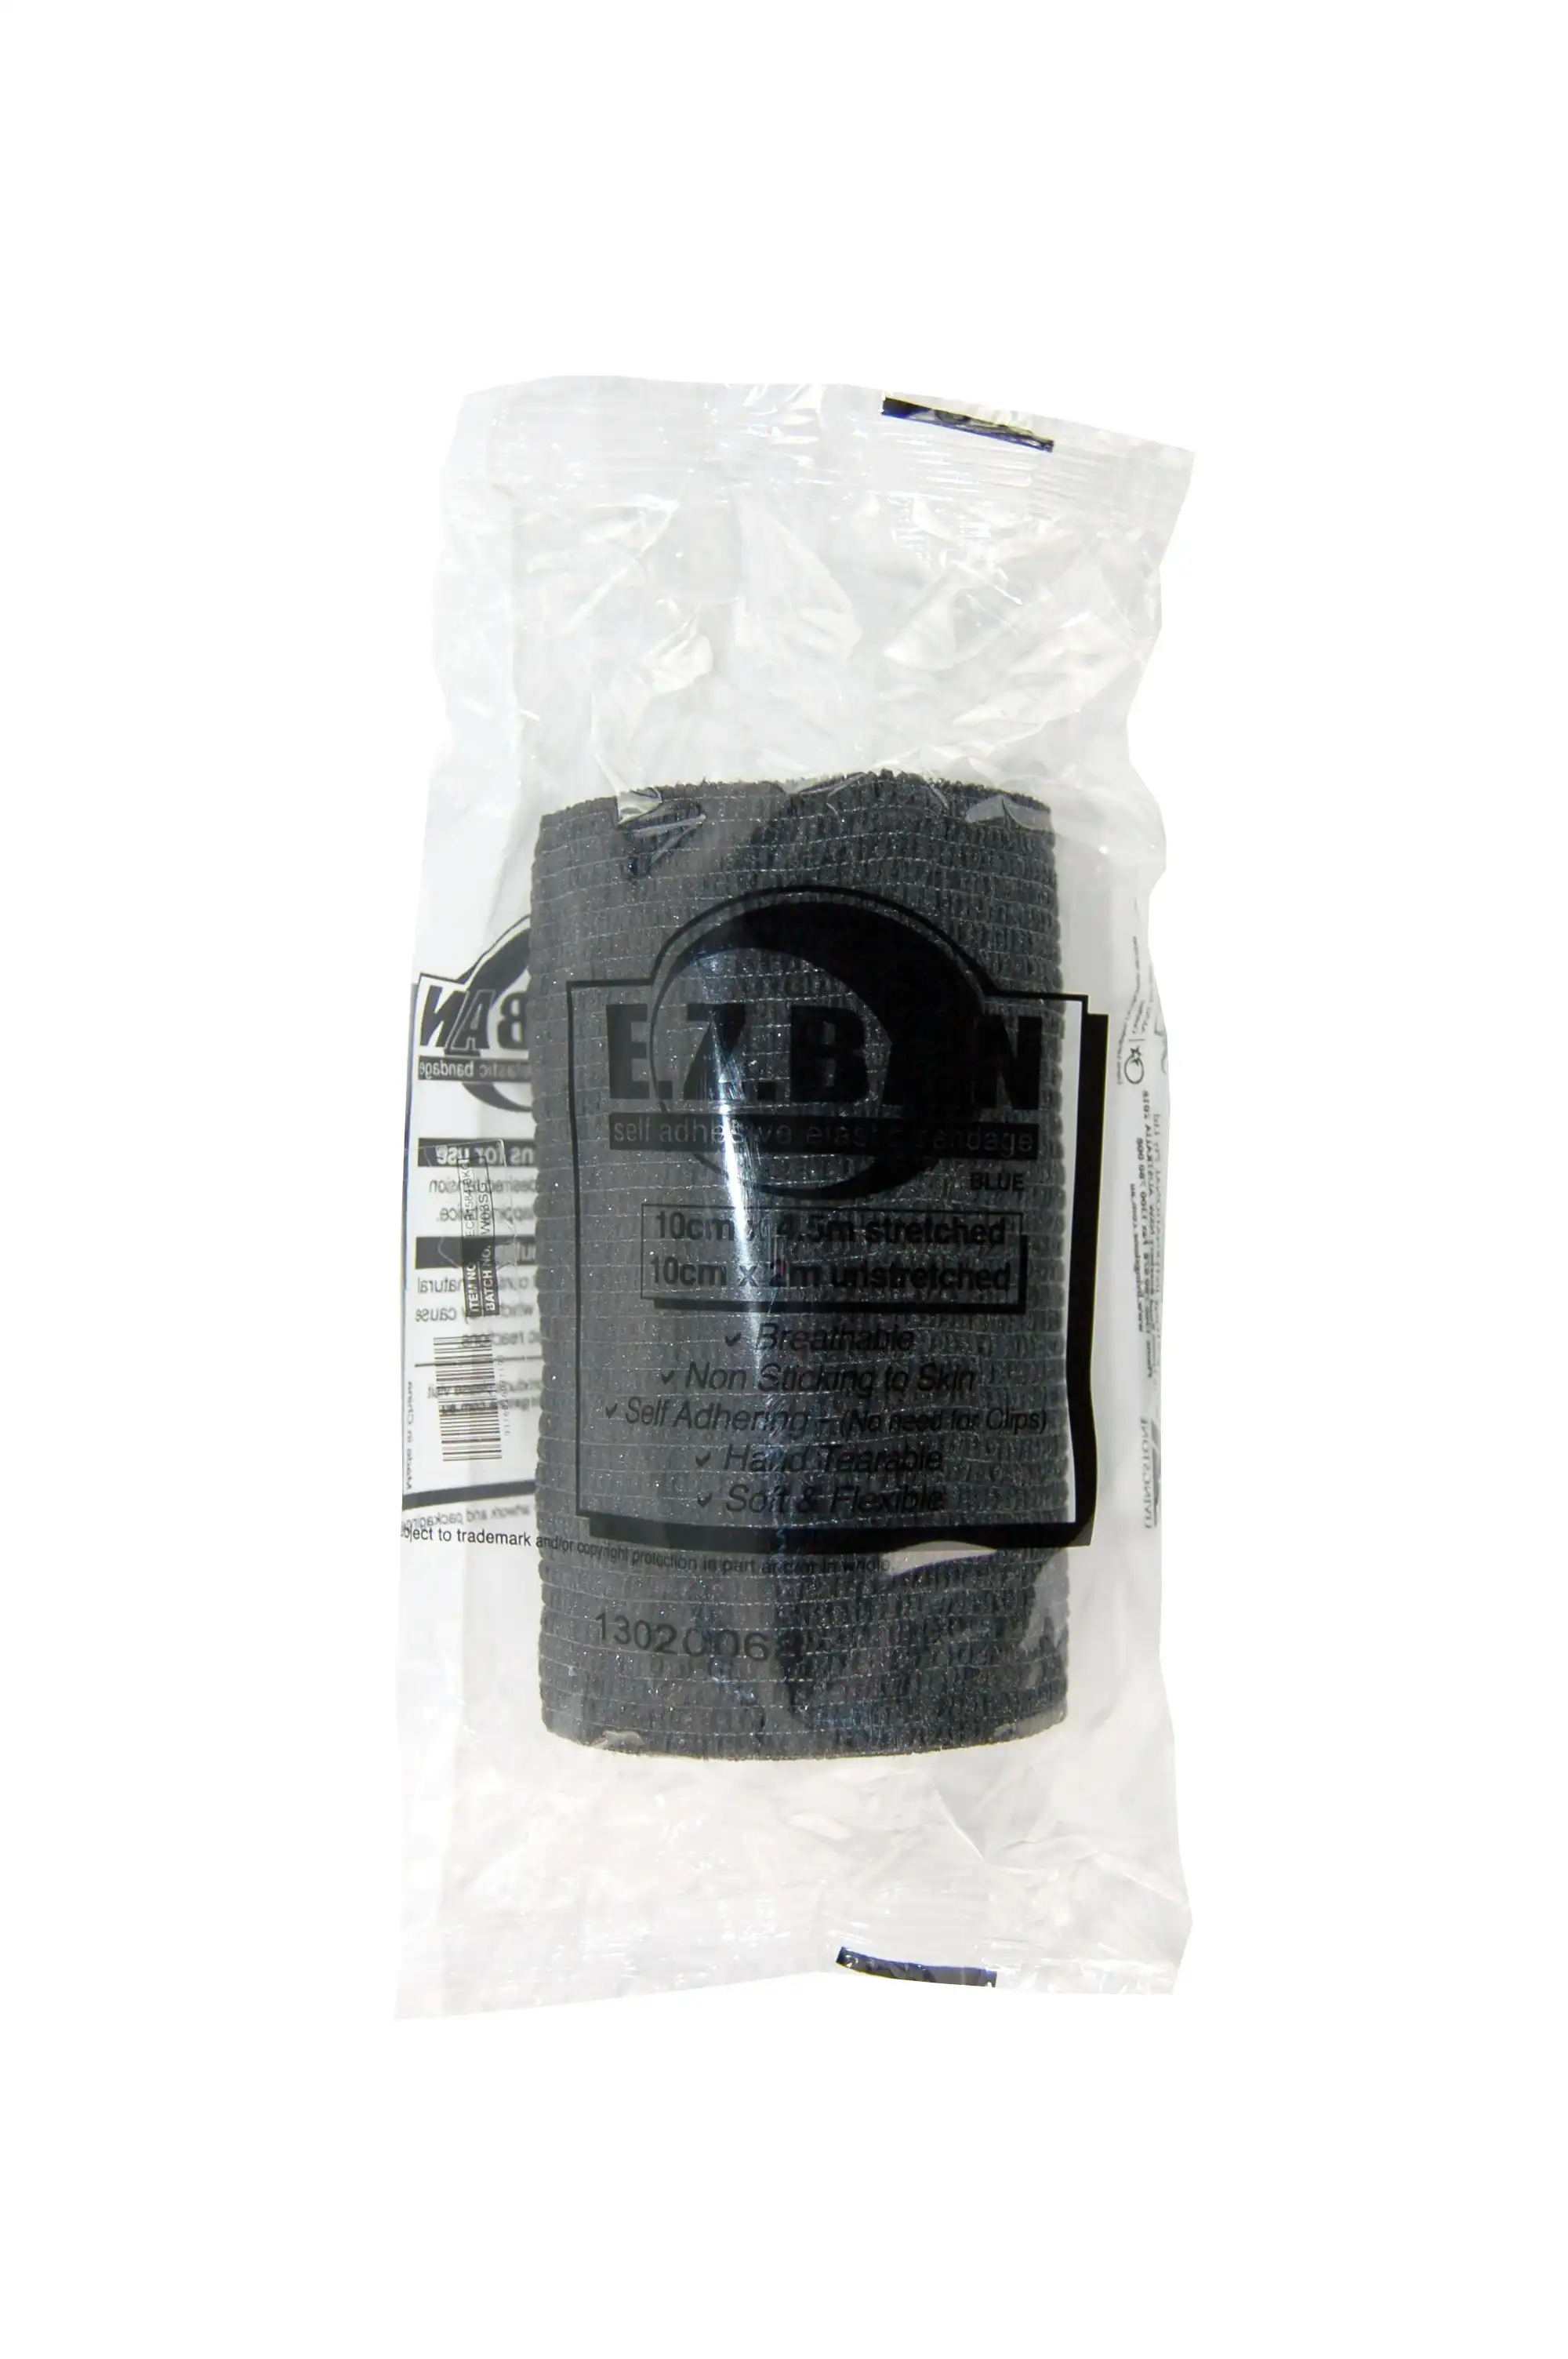 E.Z. Ban Wrap Cohesive Elastic Bandage 10cm x 2m stretch to 4.5m Black